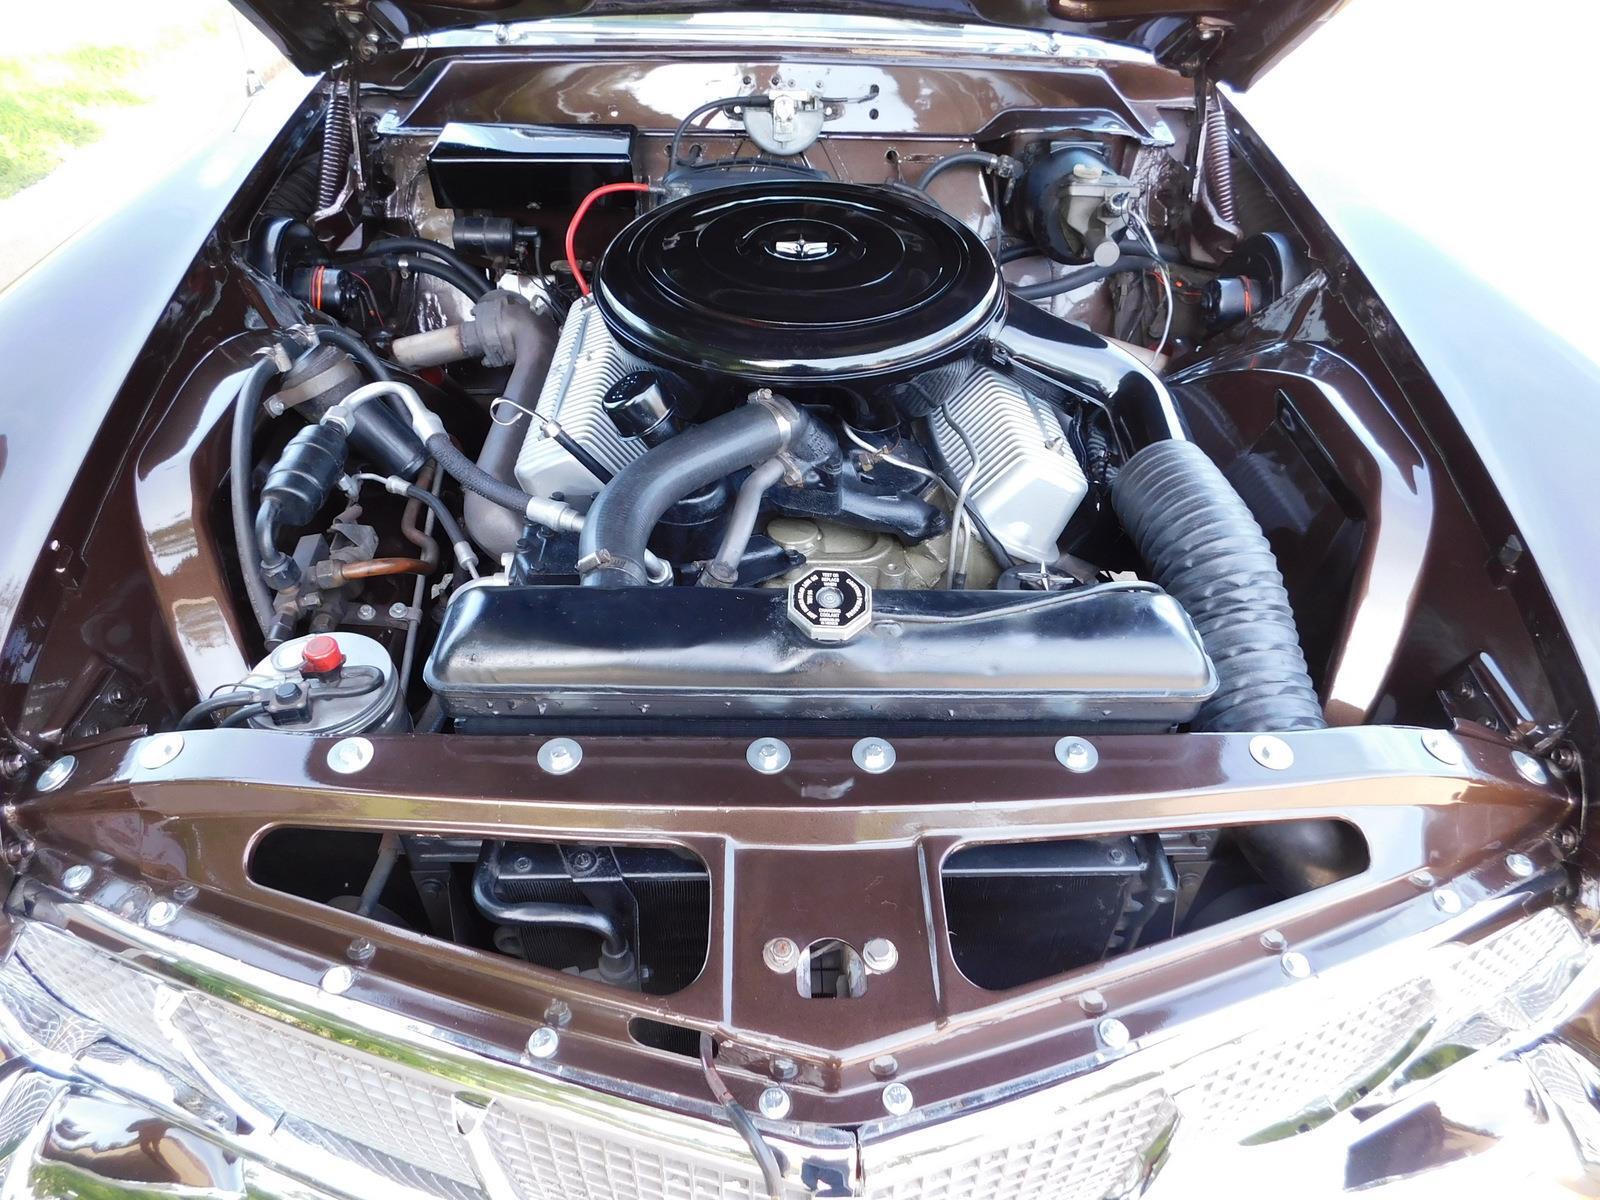 1956 Lincoln Continental - Y-block V-8 engine